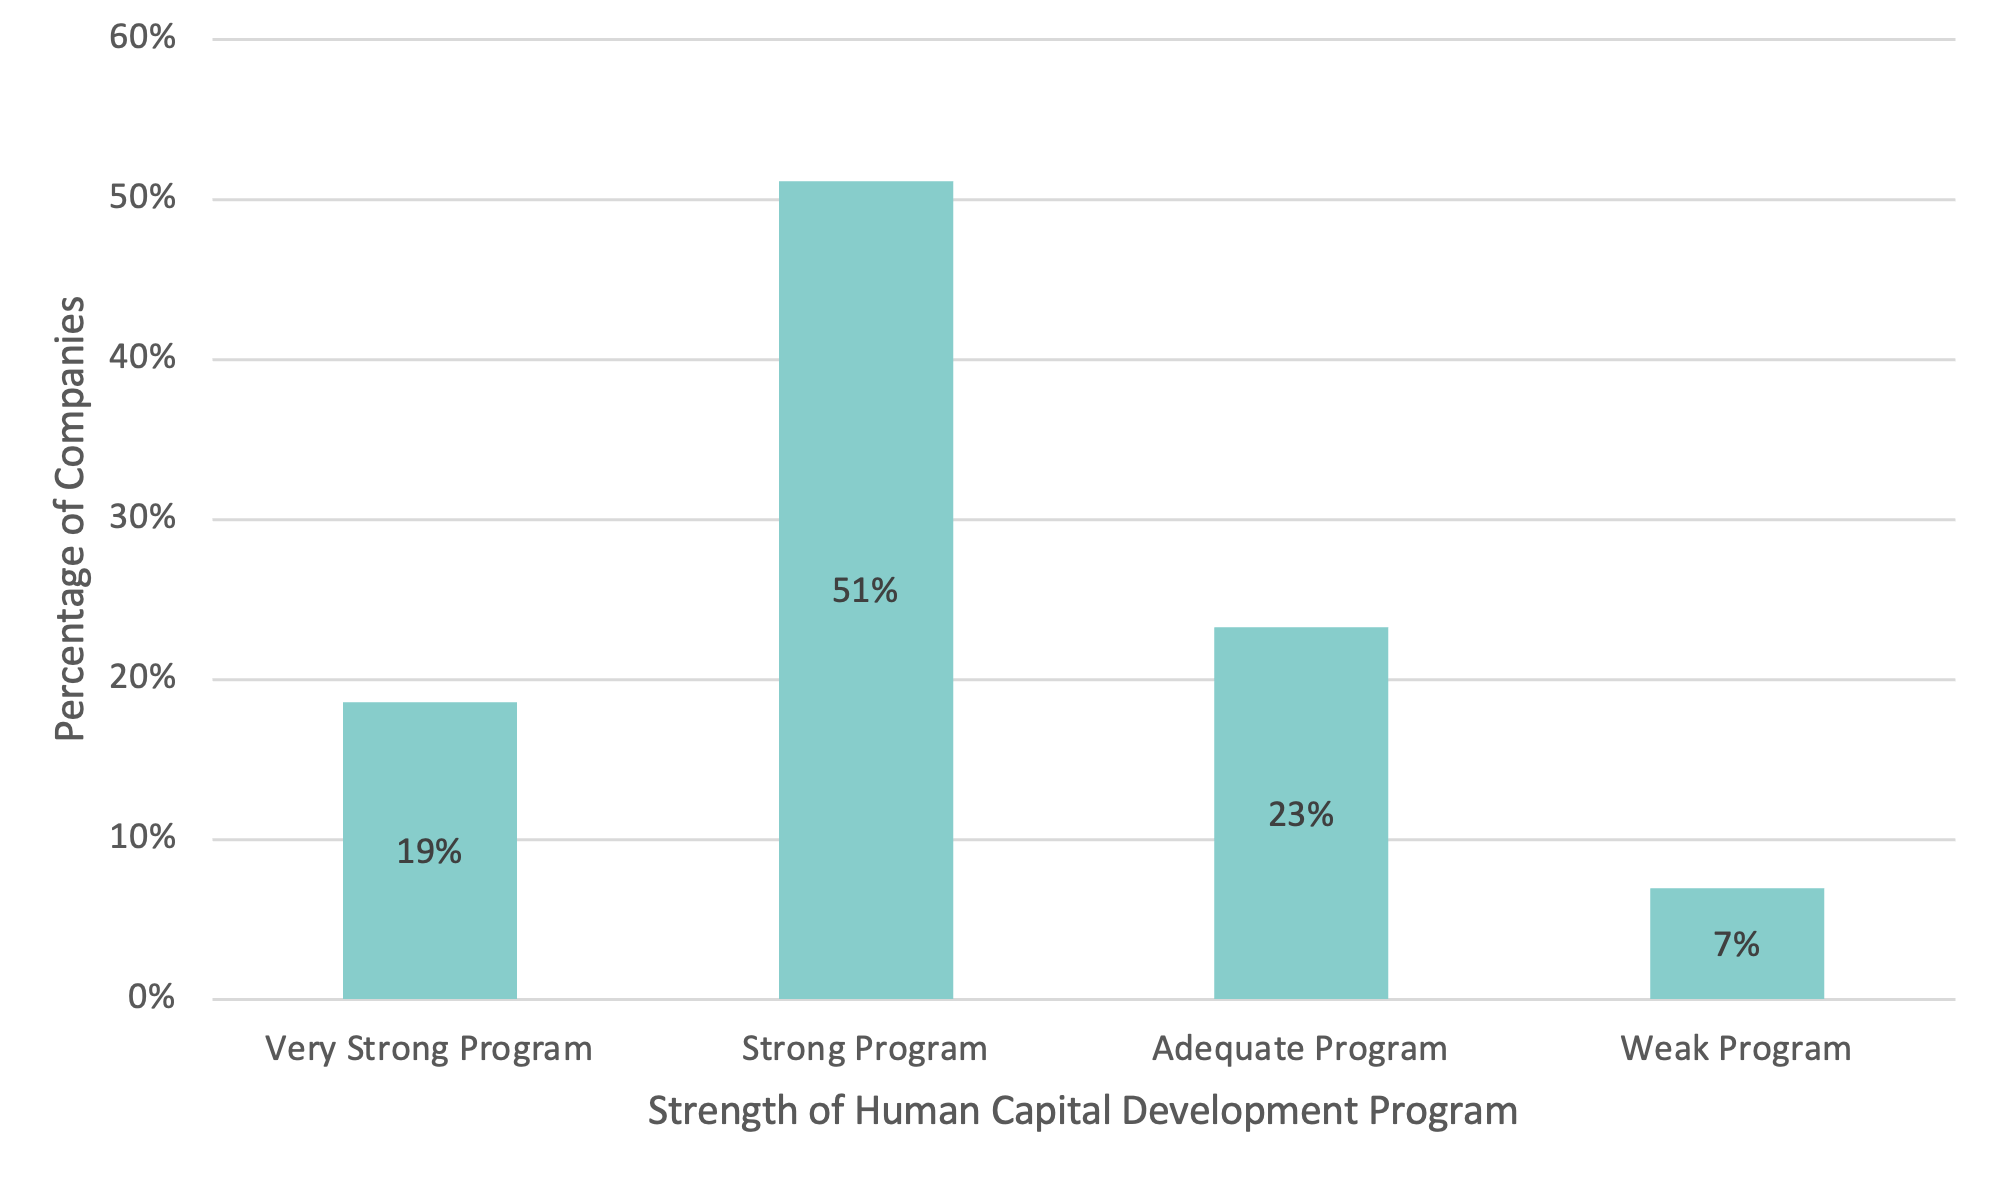 Figure 2. Strength of Human Capital Development Programs Across Auto Companies